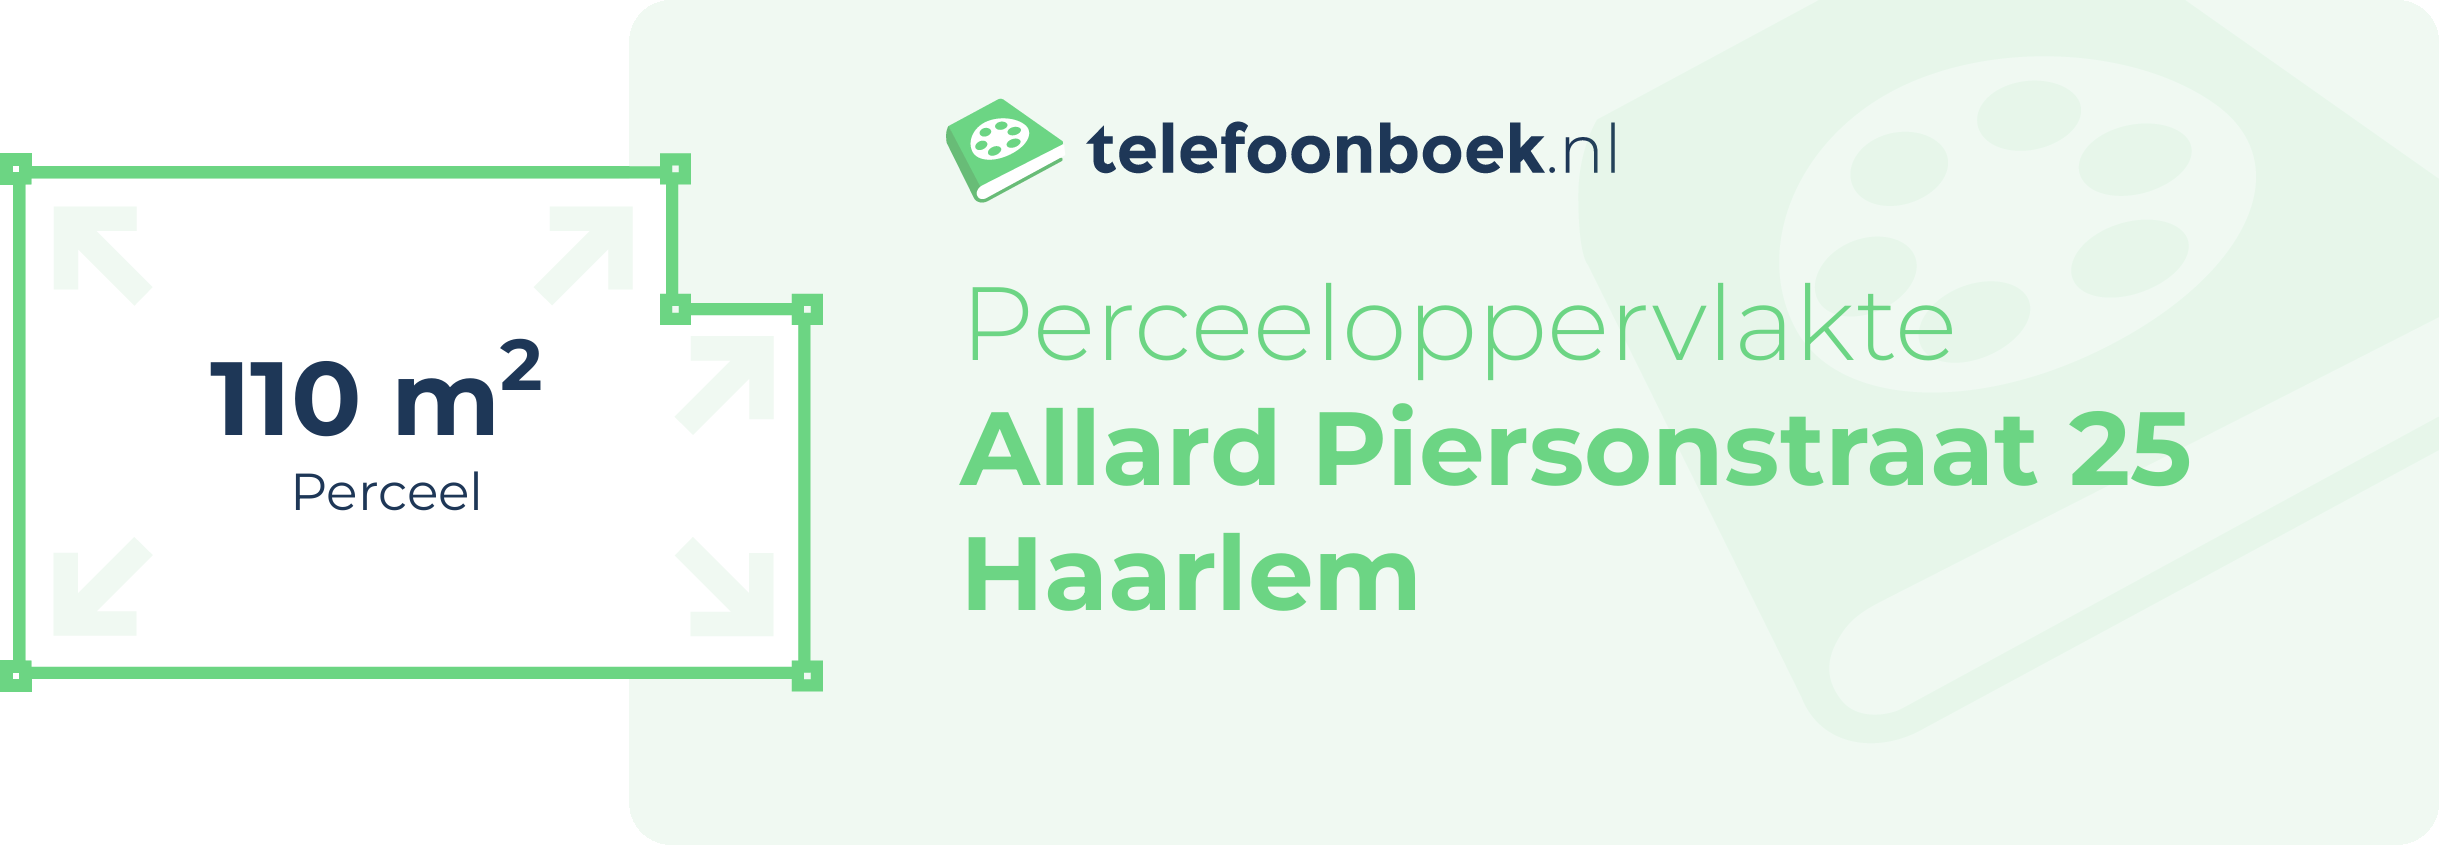 Perceeloppervlakte Allard Piersonstraat 25 Haarlem